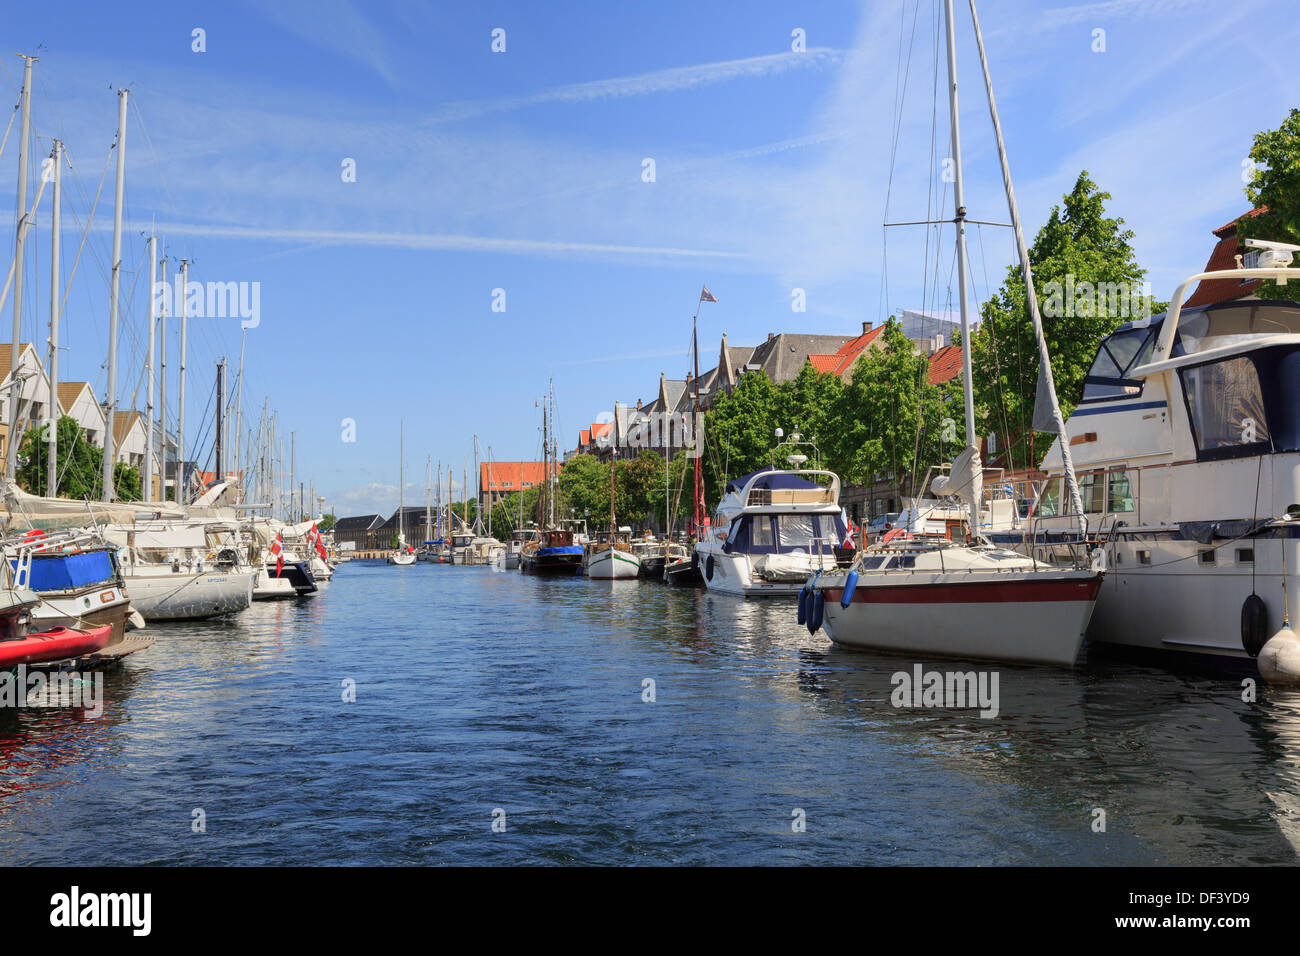 Ormeggiate barche, barche e leisurecraft su Christianshavns Kanal, Overgaden, Christianshavn, Copenaghen, Zelanda, Danimarca Foto Stock